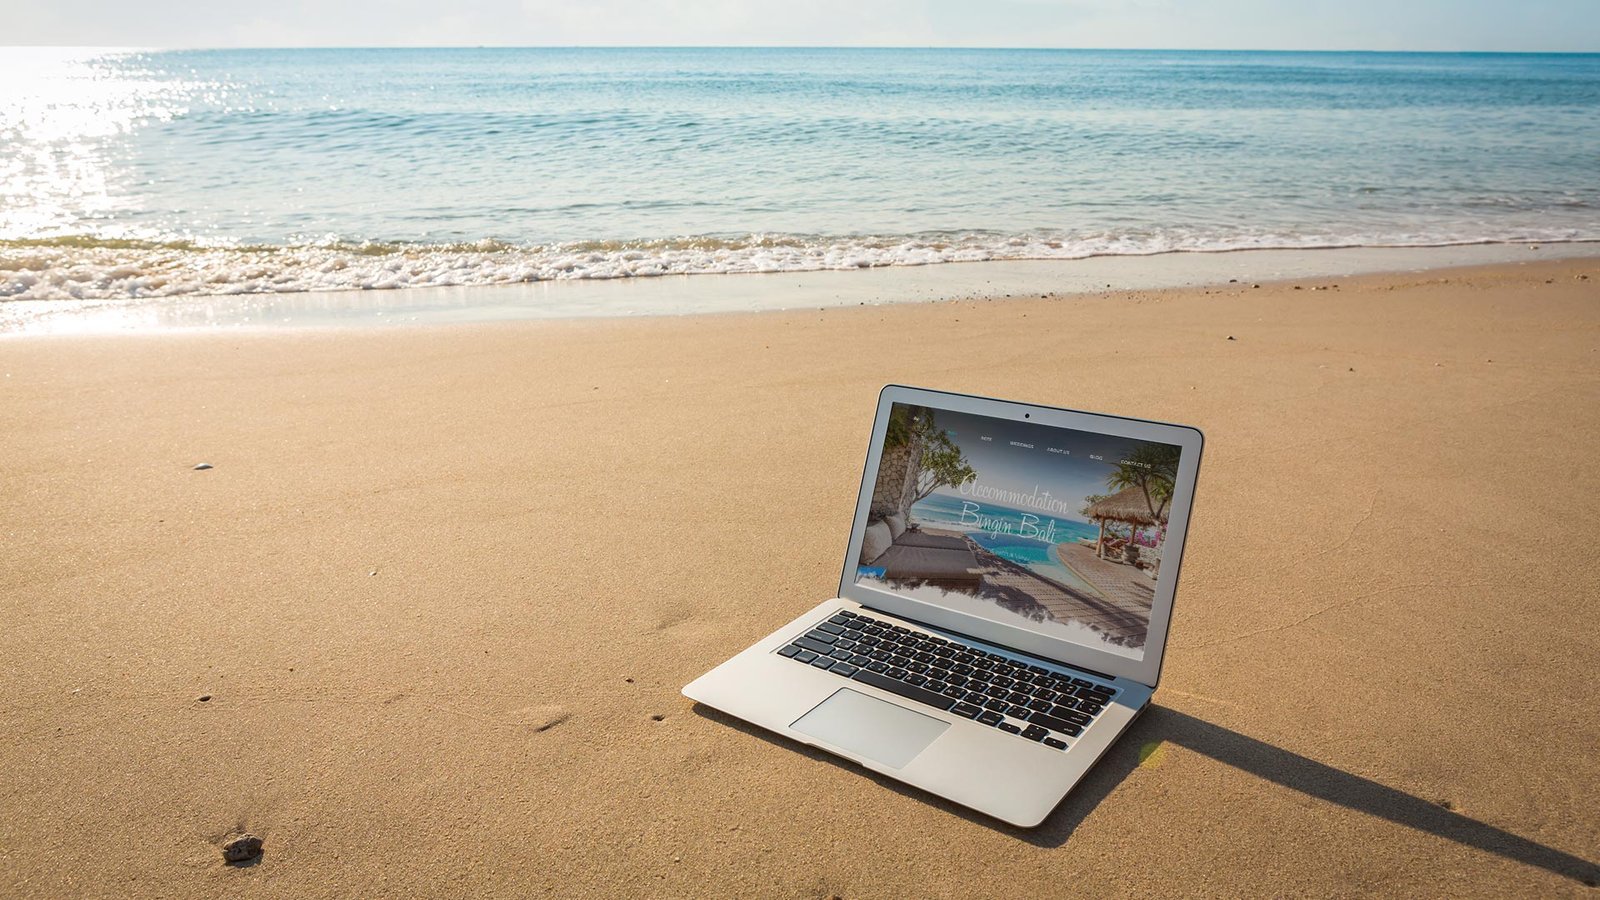 Laptop, beach, and ocean